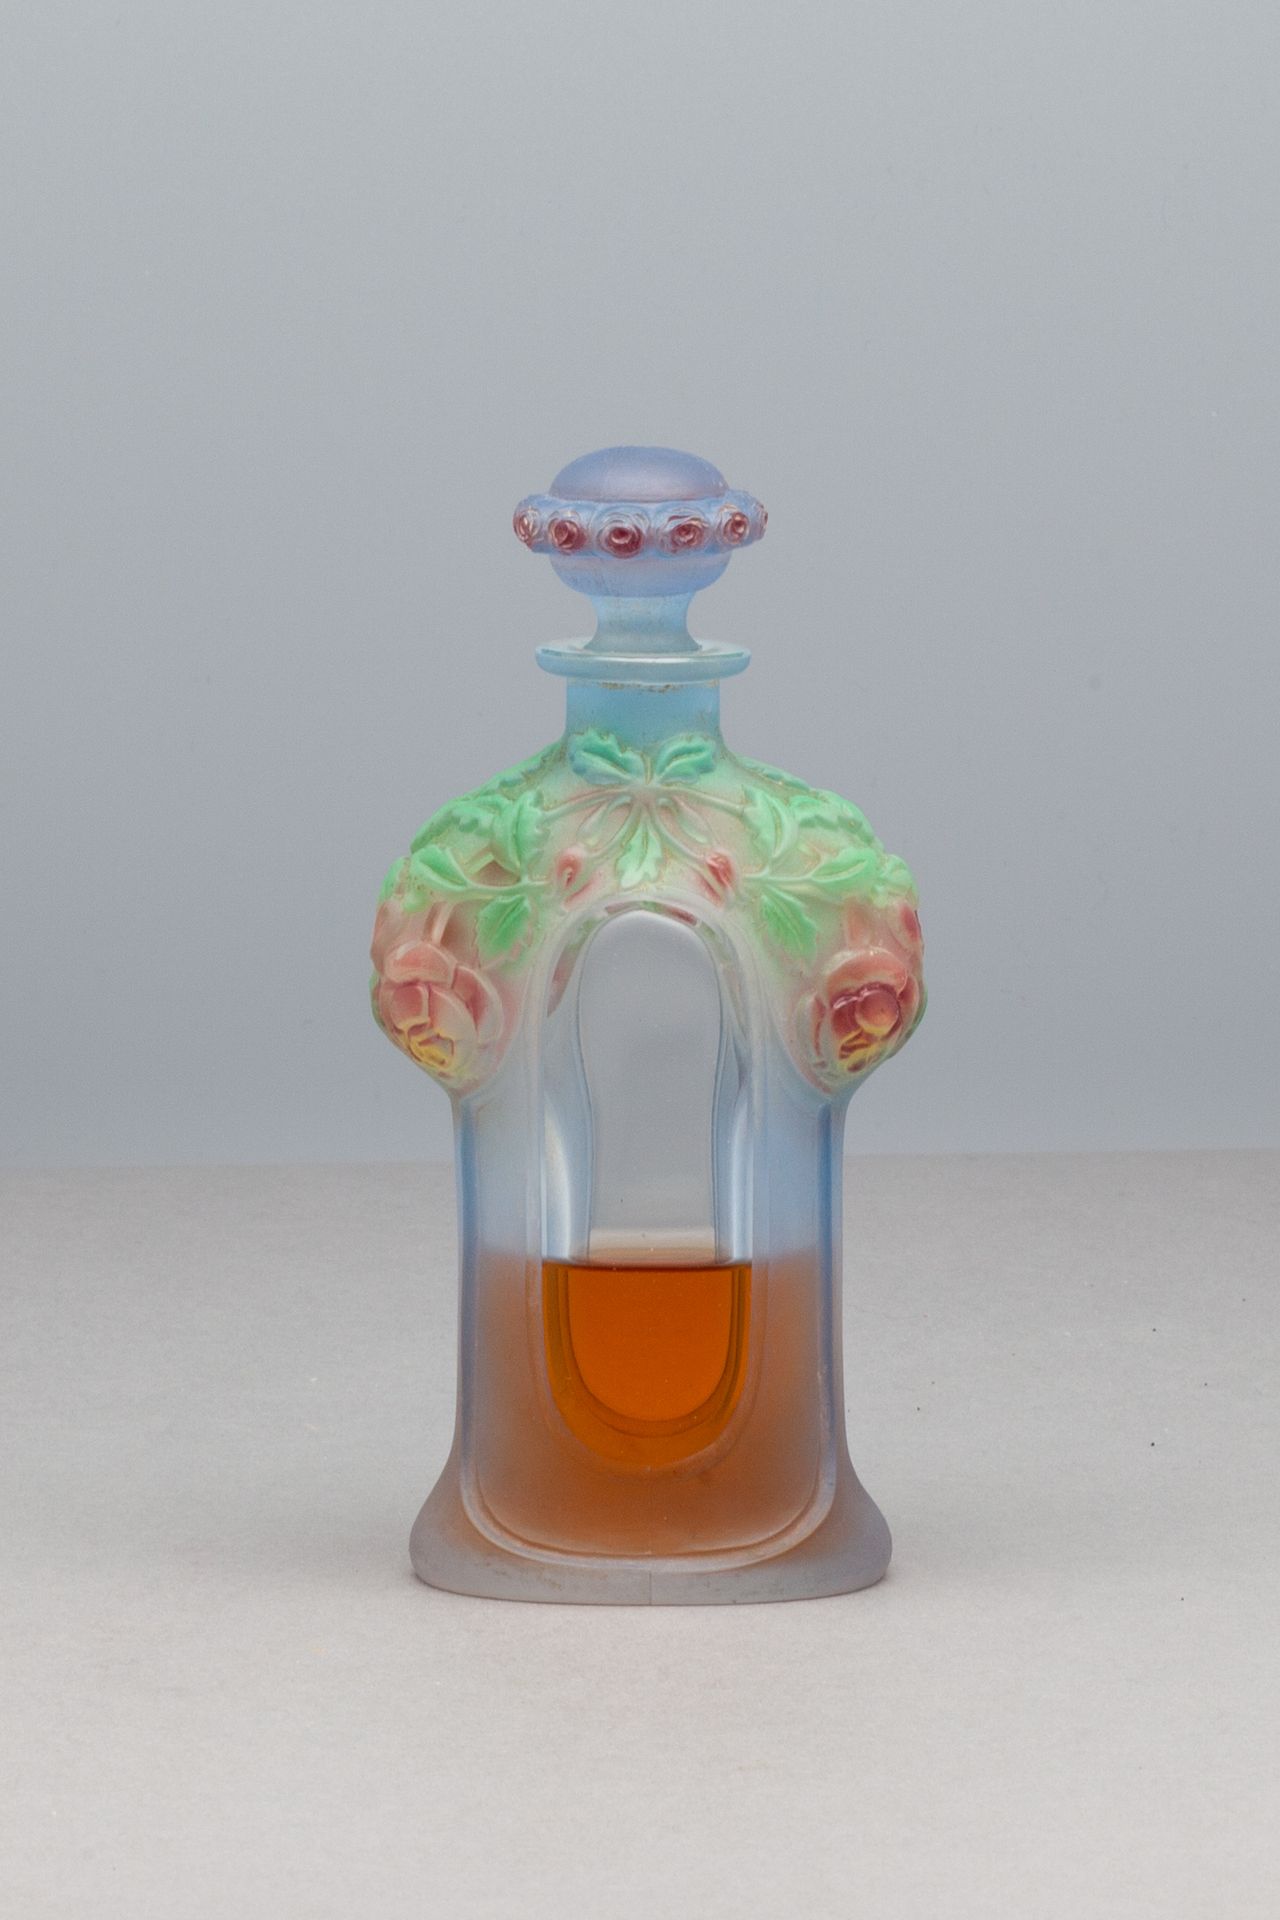 ANONYME 玻璃糊状瓶，有三种颜色的玫瑰装饰。高13.5厘米